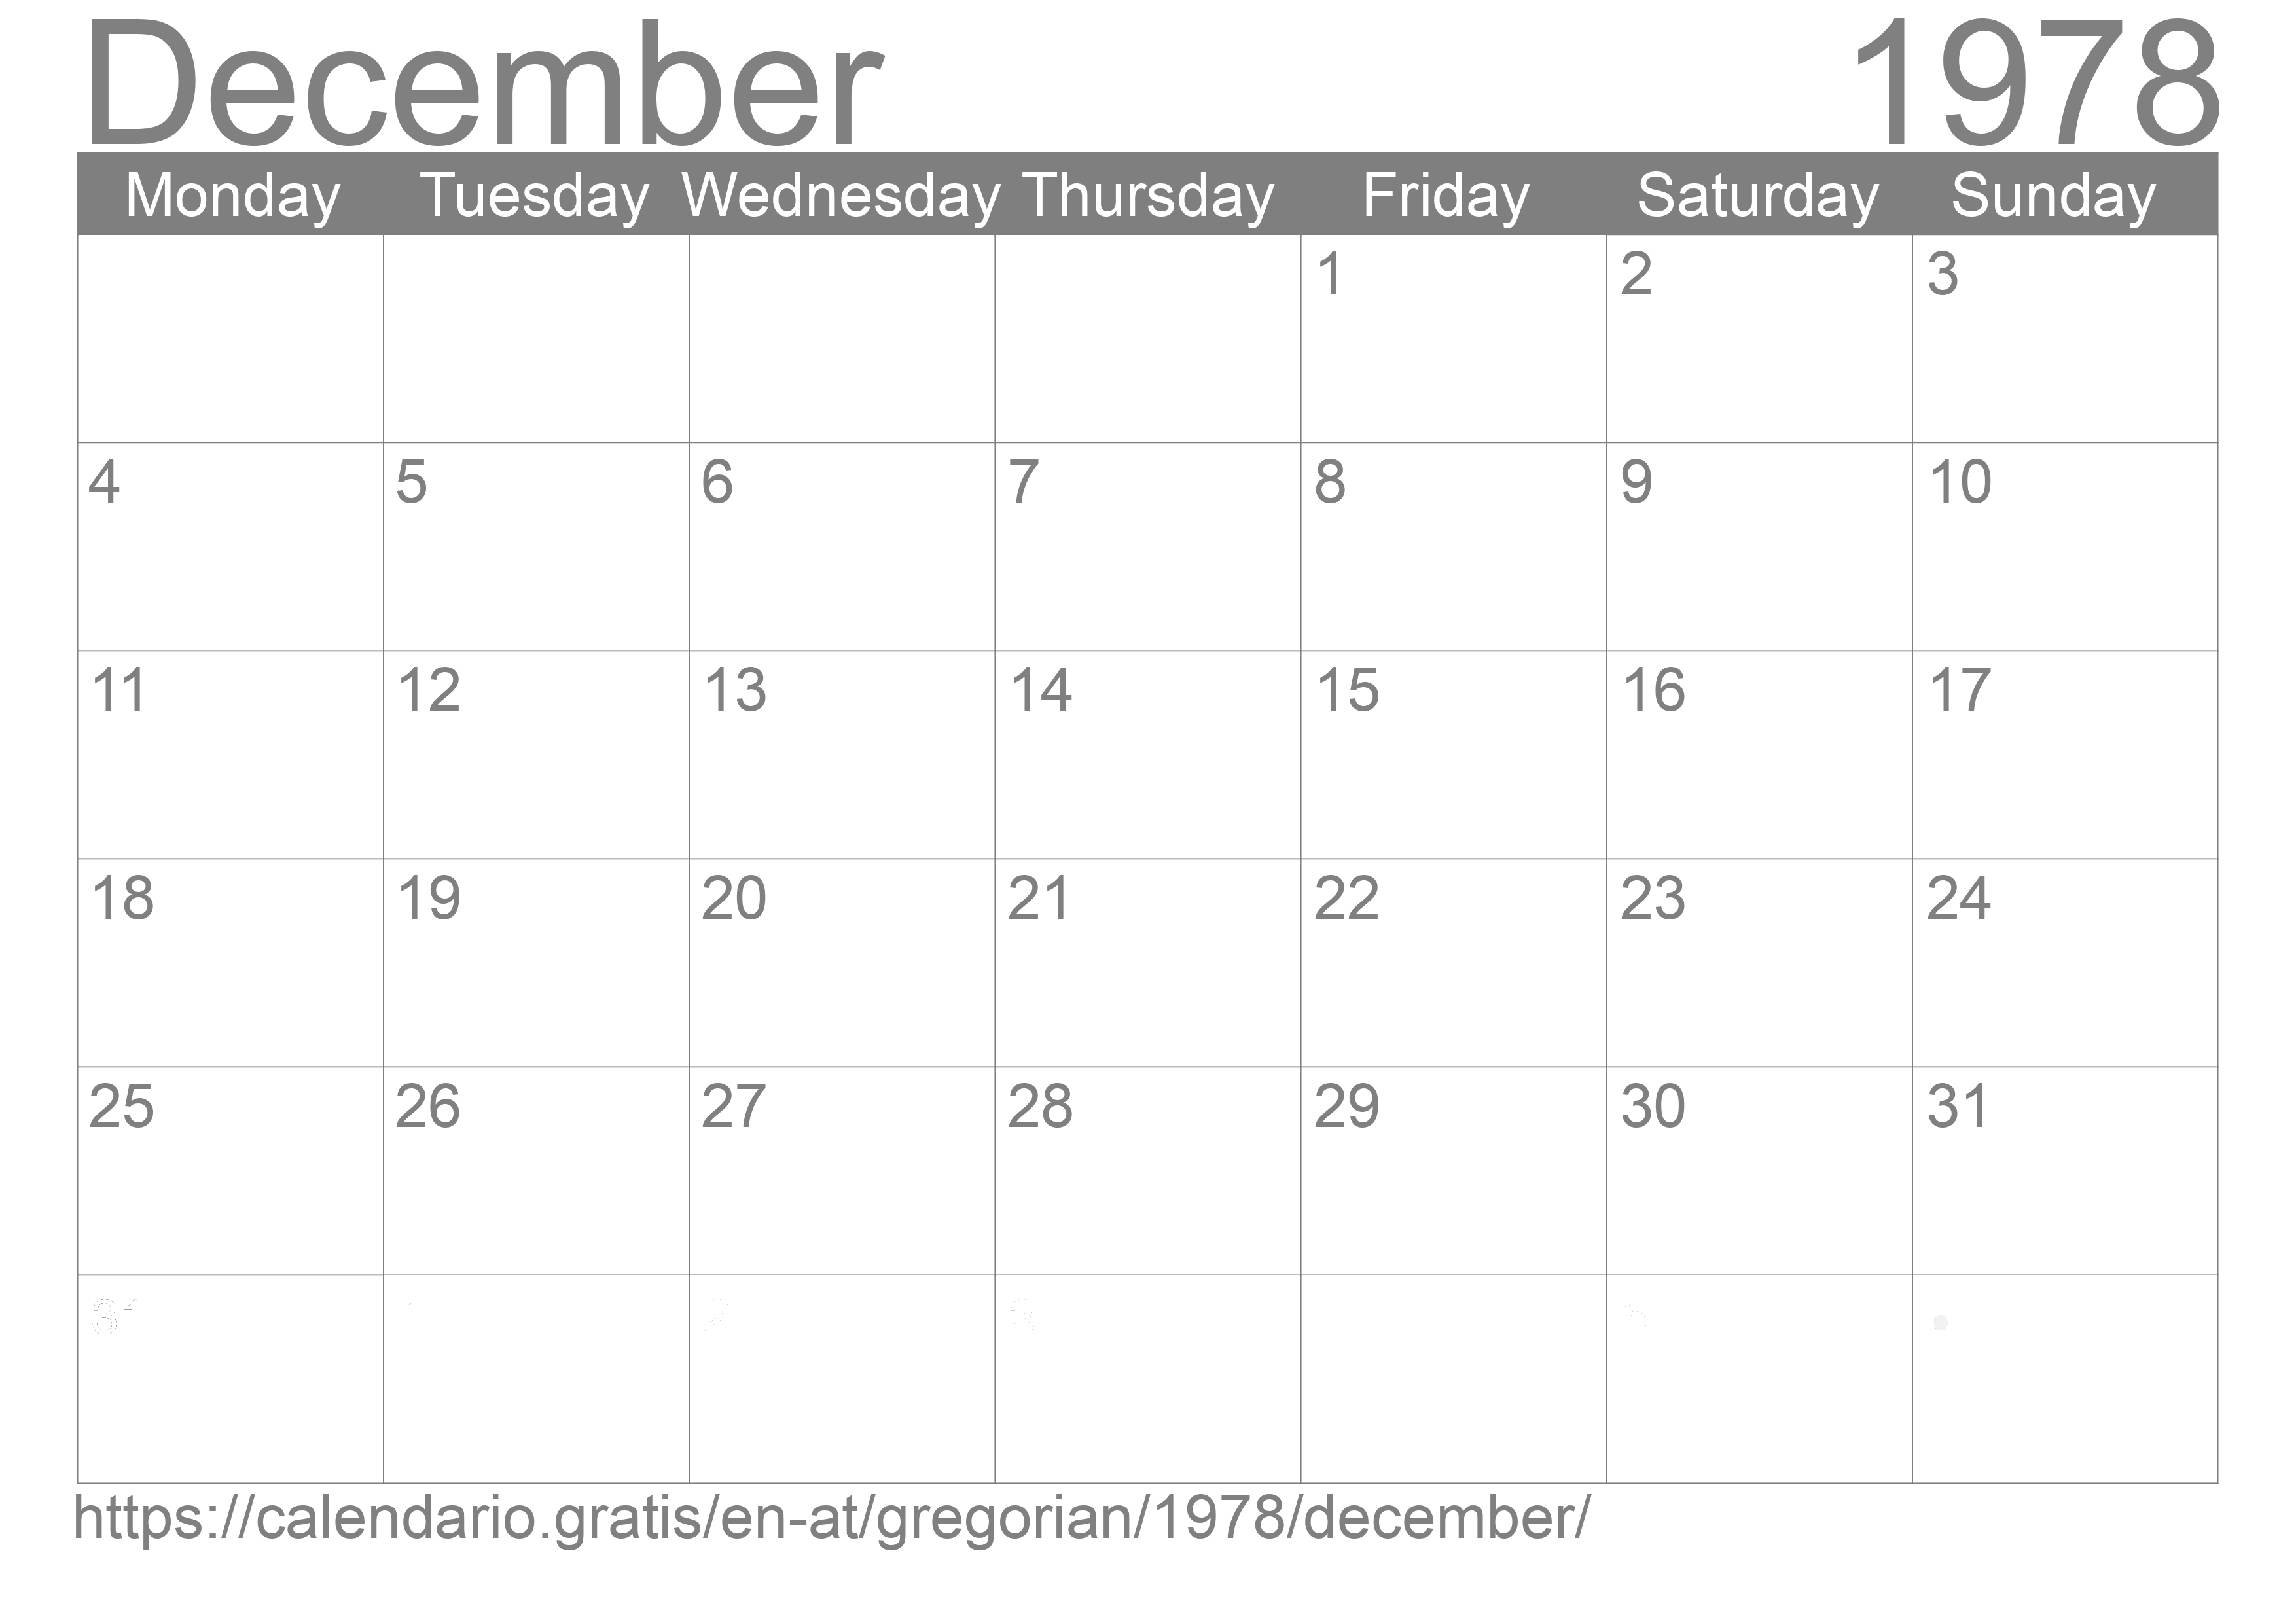 Calendar December 1978 to print